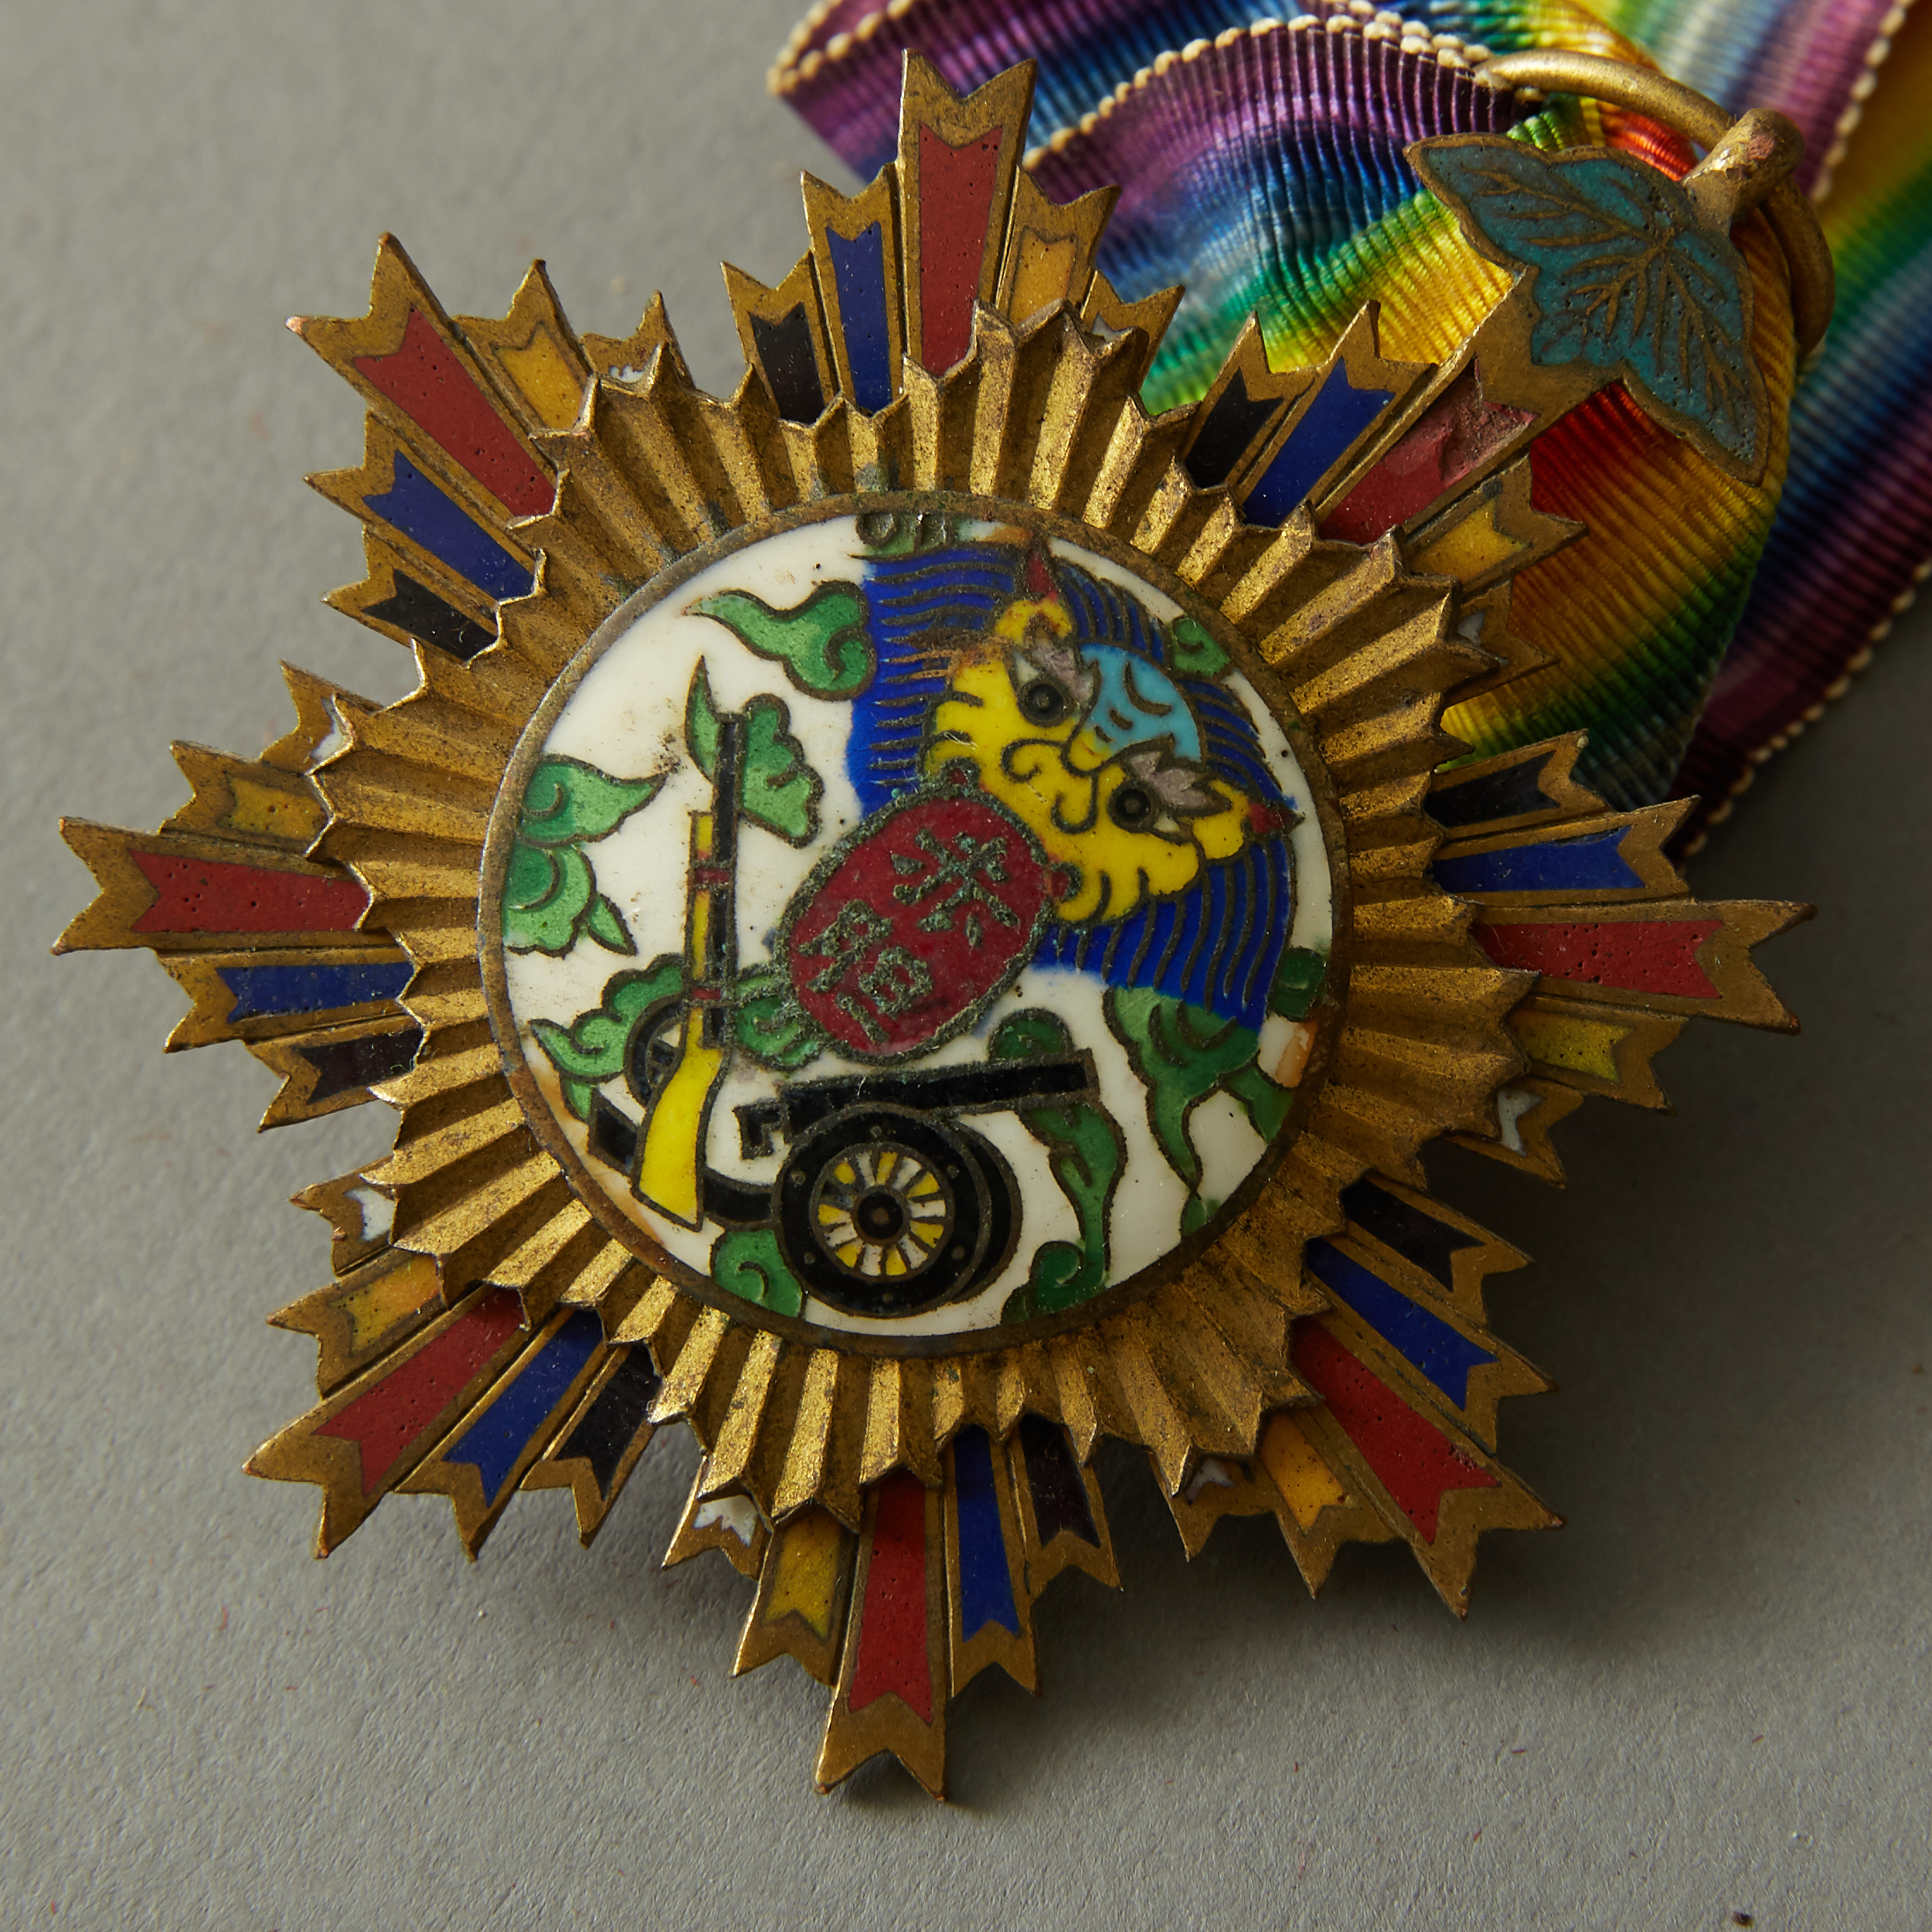 Chinese KMT PLA Military Enamel Medal or Badge Chi Dan - Image 4 of 4